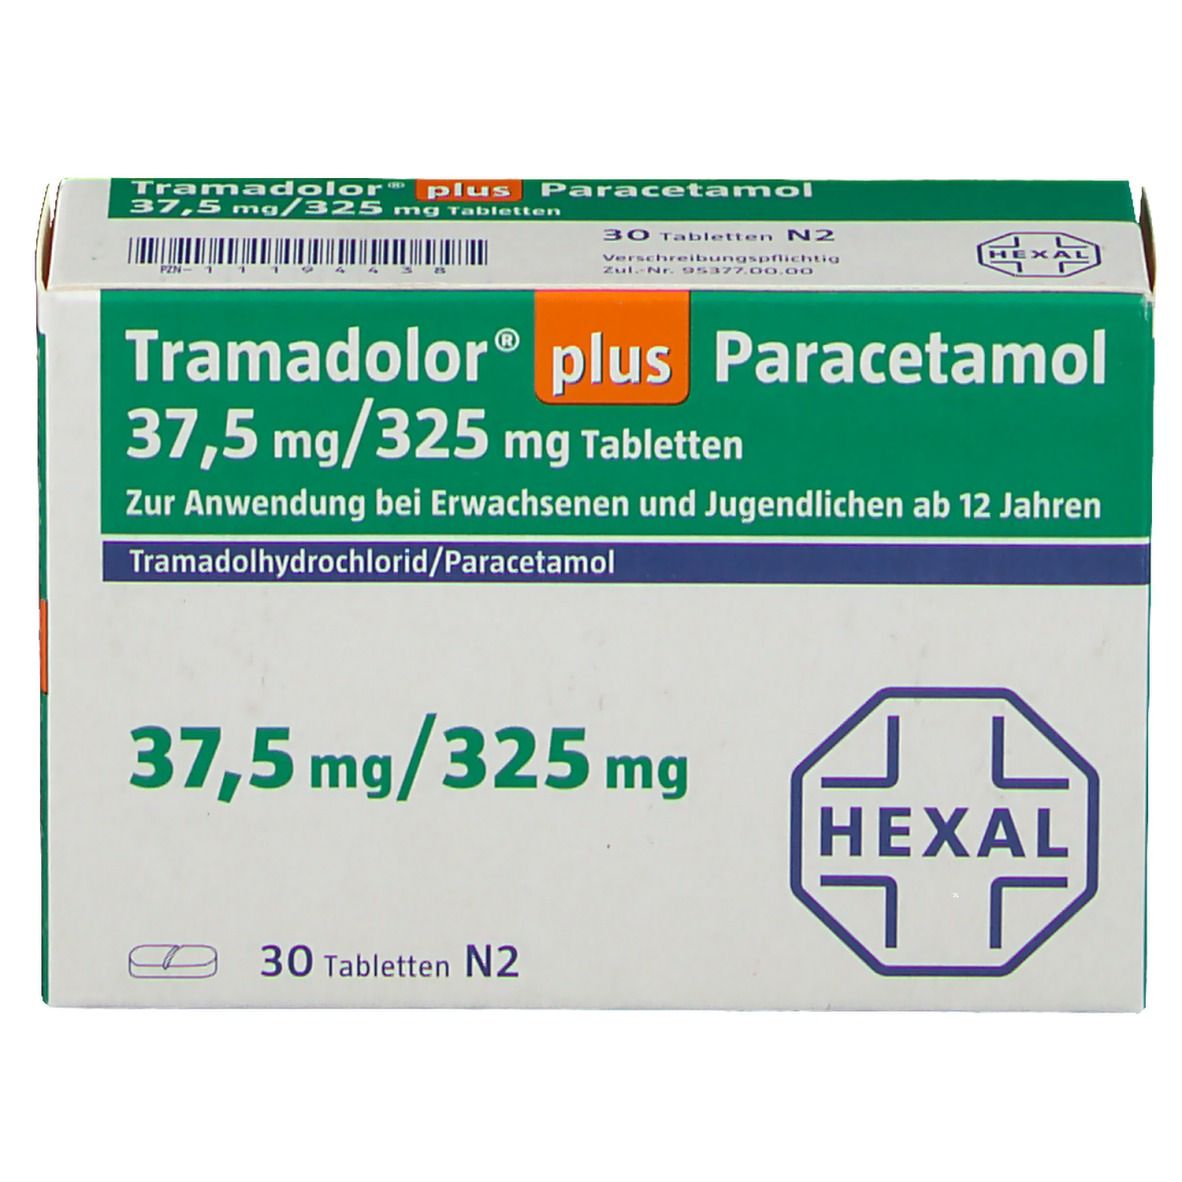 Tramadolor® plus Paracetamol 37,5 mg/325 mg